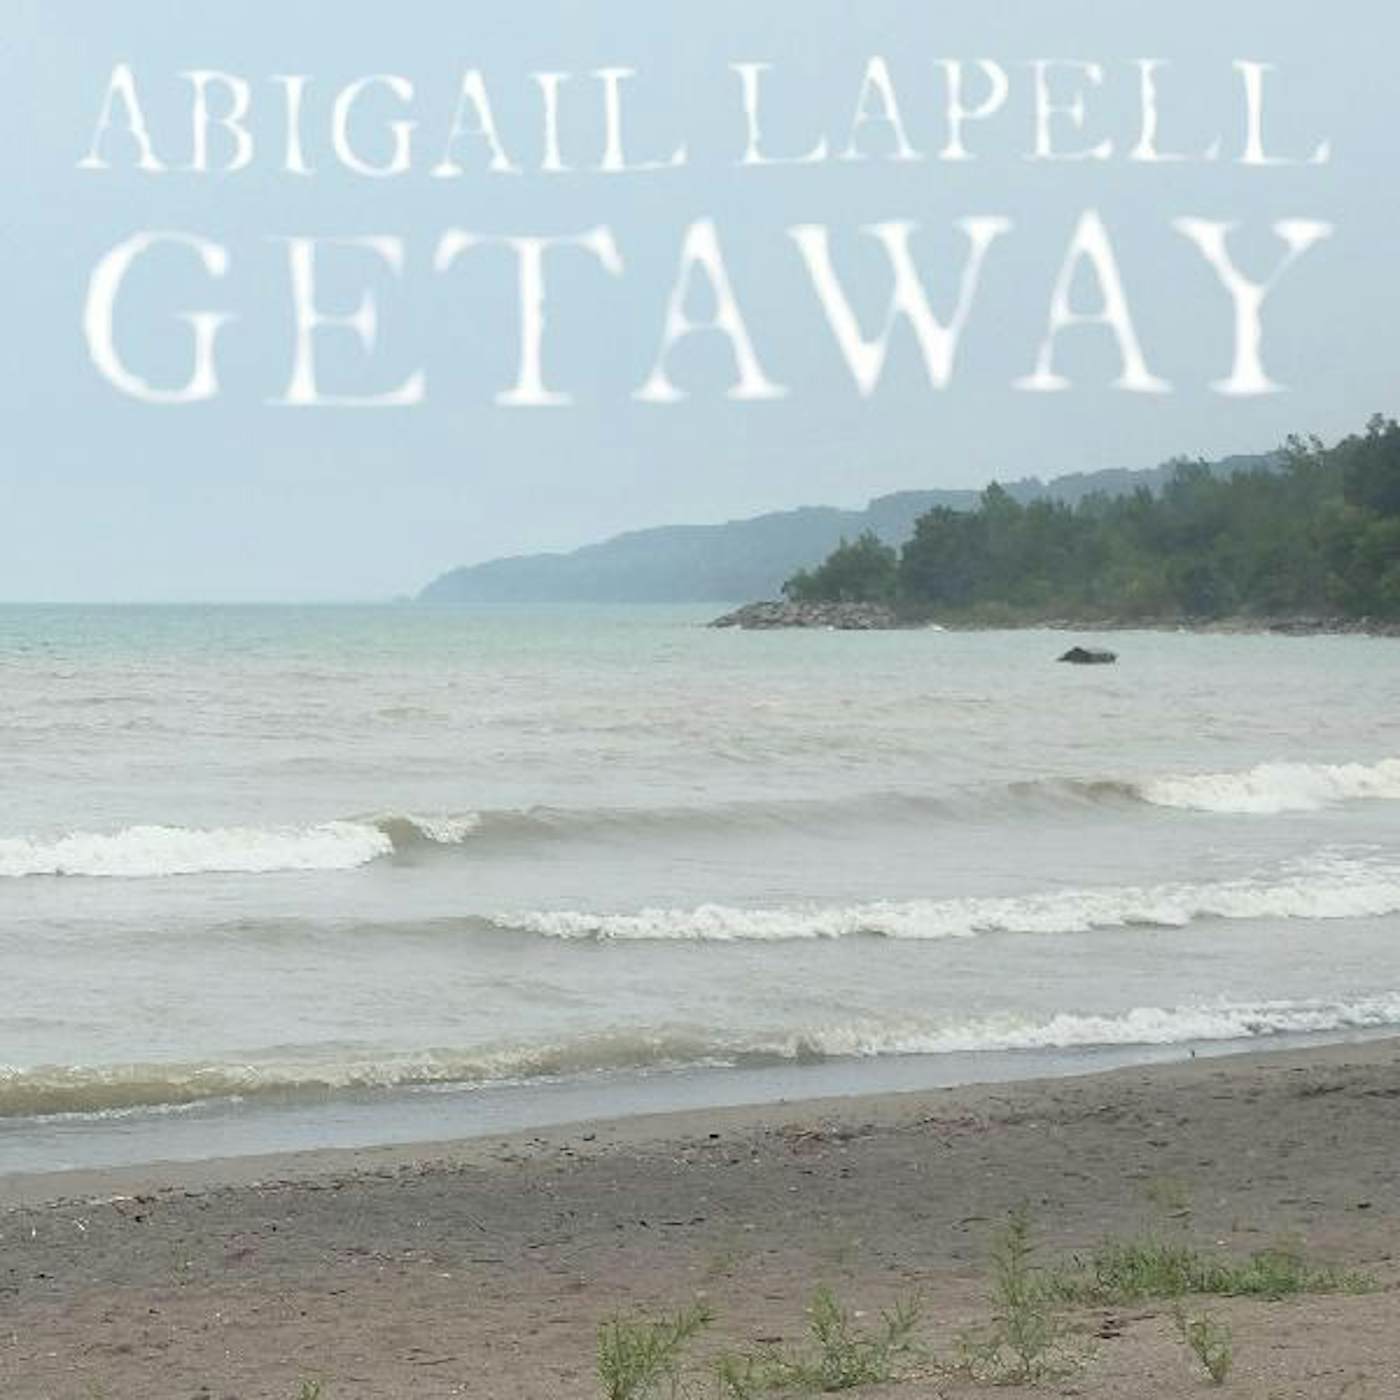 Abigail Lapell Getaway (Adriatic Blue) Vinyl Record